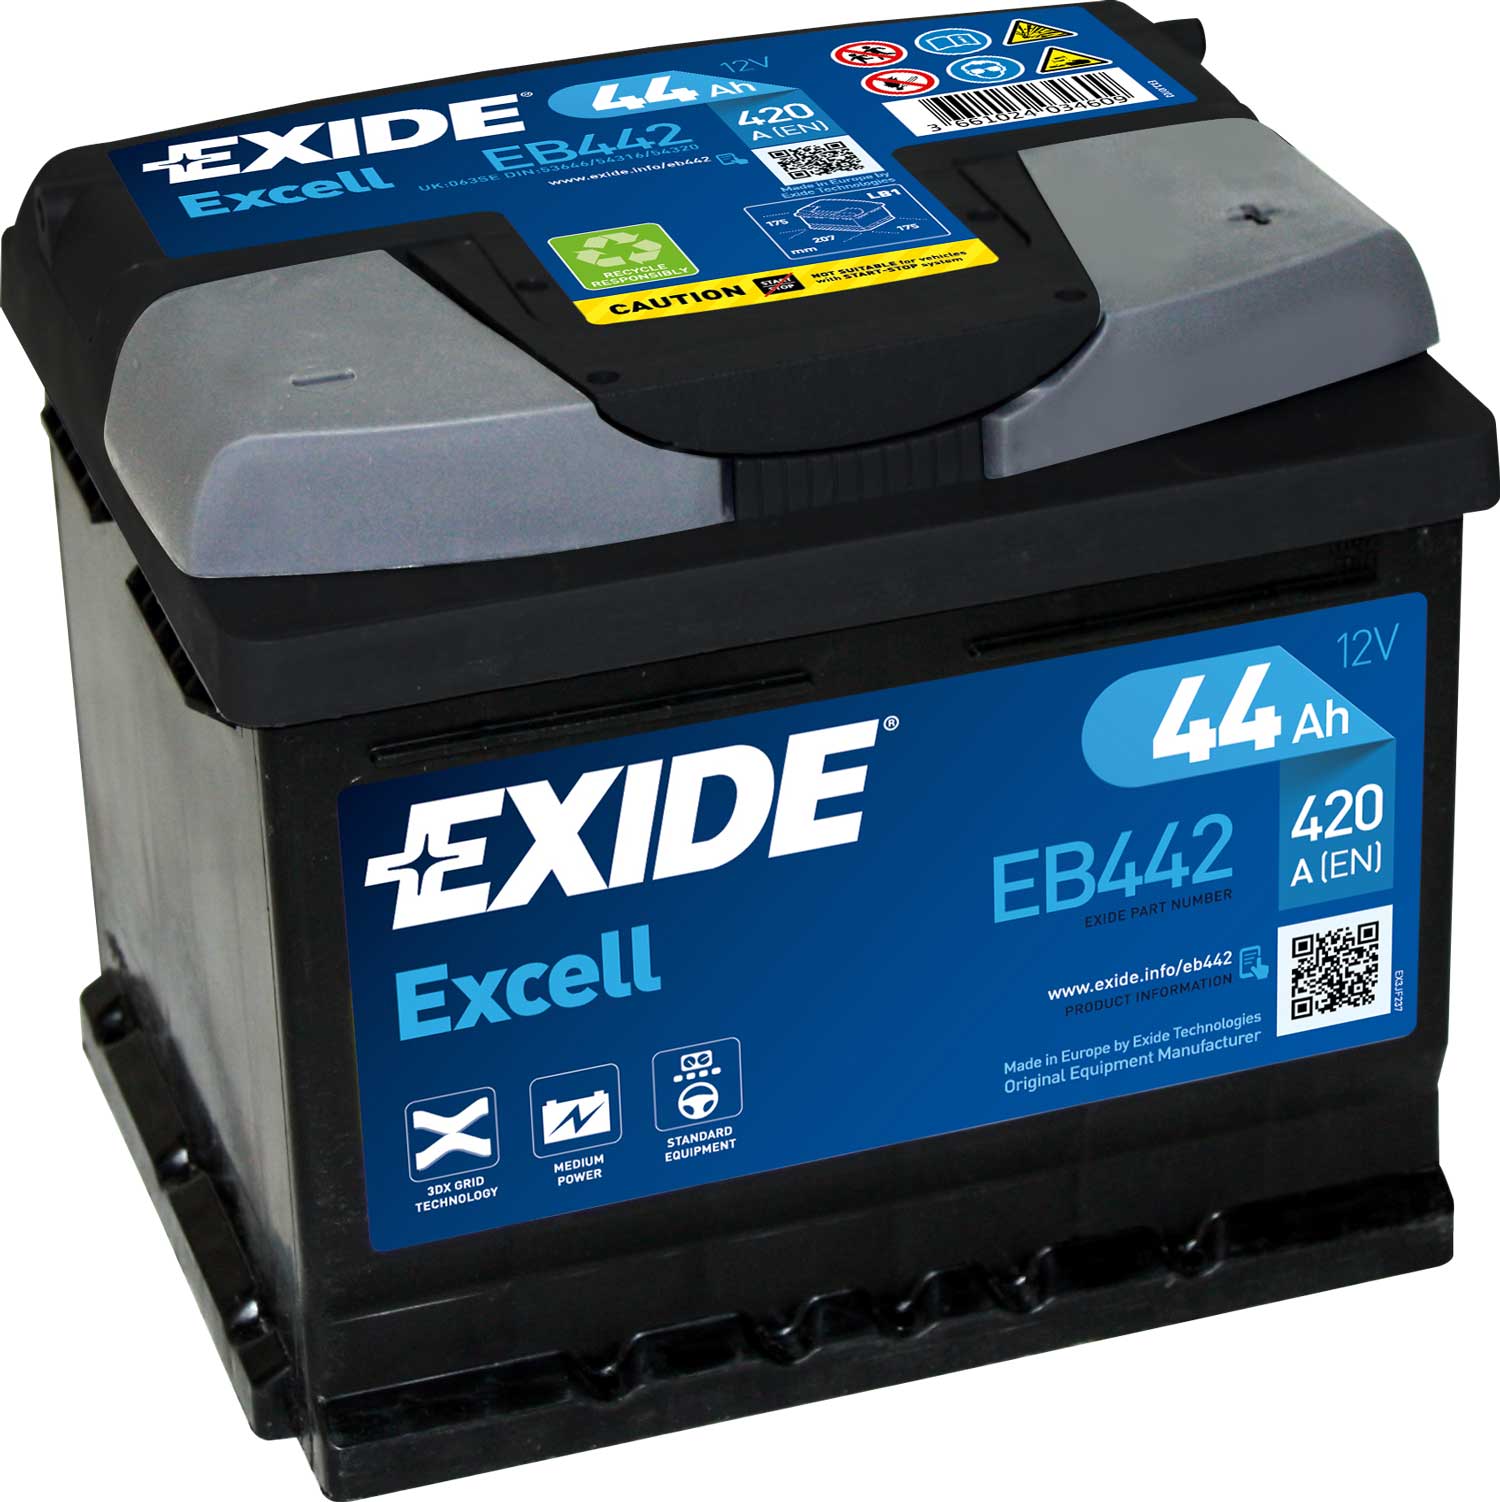 Exide EB442 Excell 12V 44Ah 420A Autobatterie, Starterbatterie, Boot, Batterien für